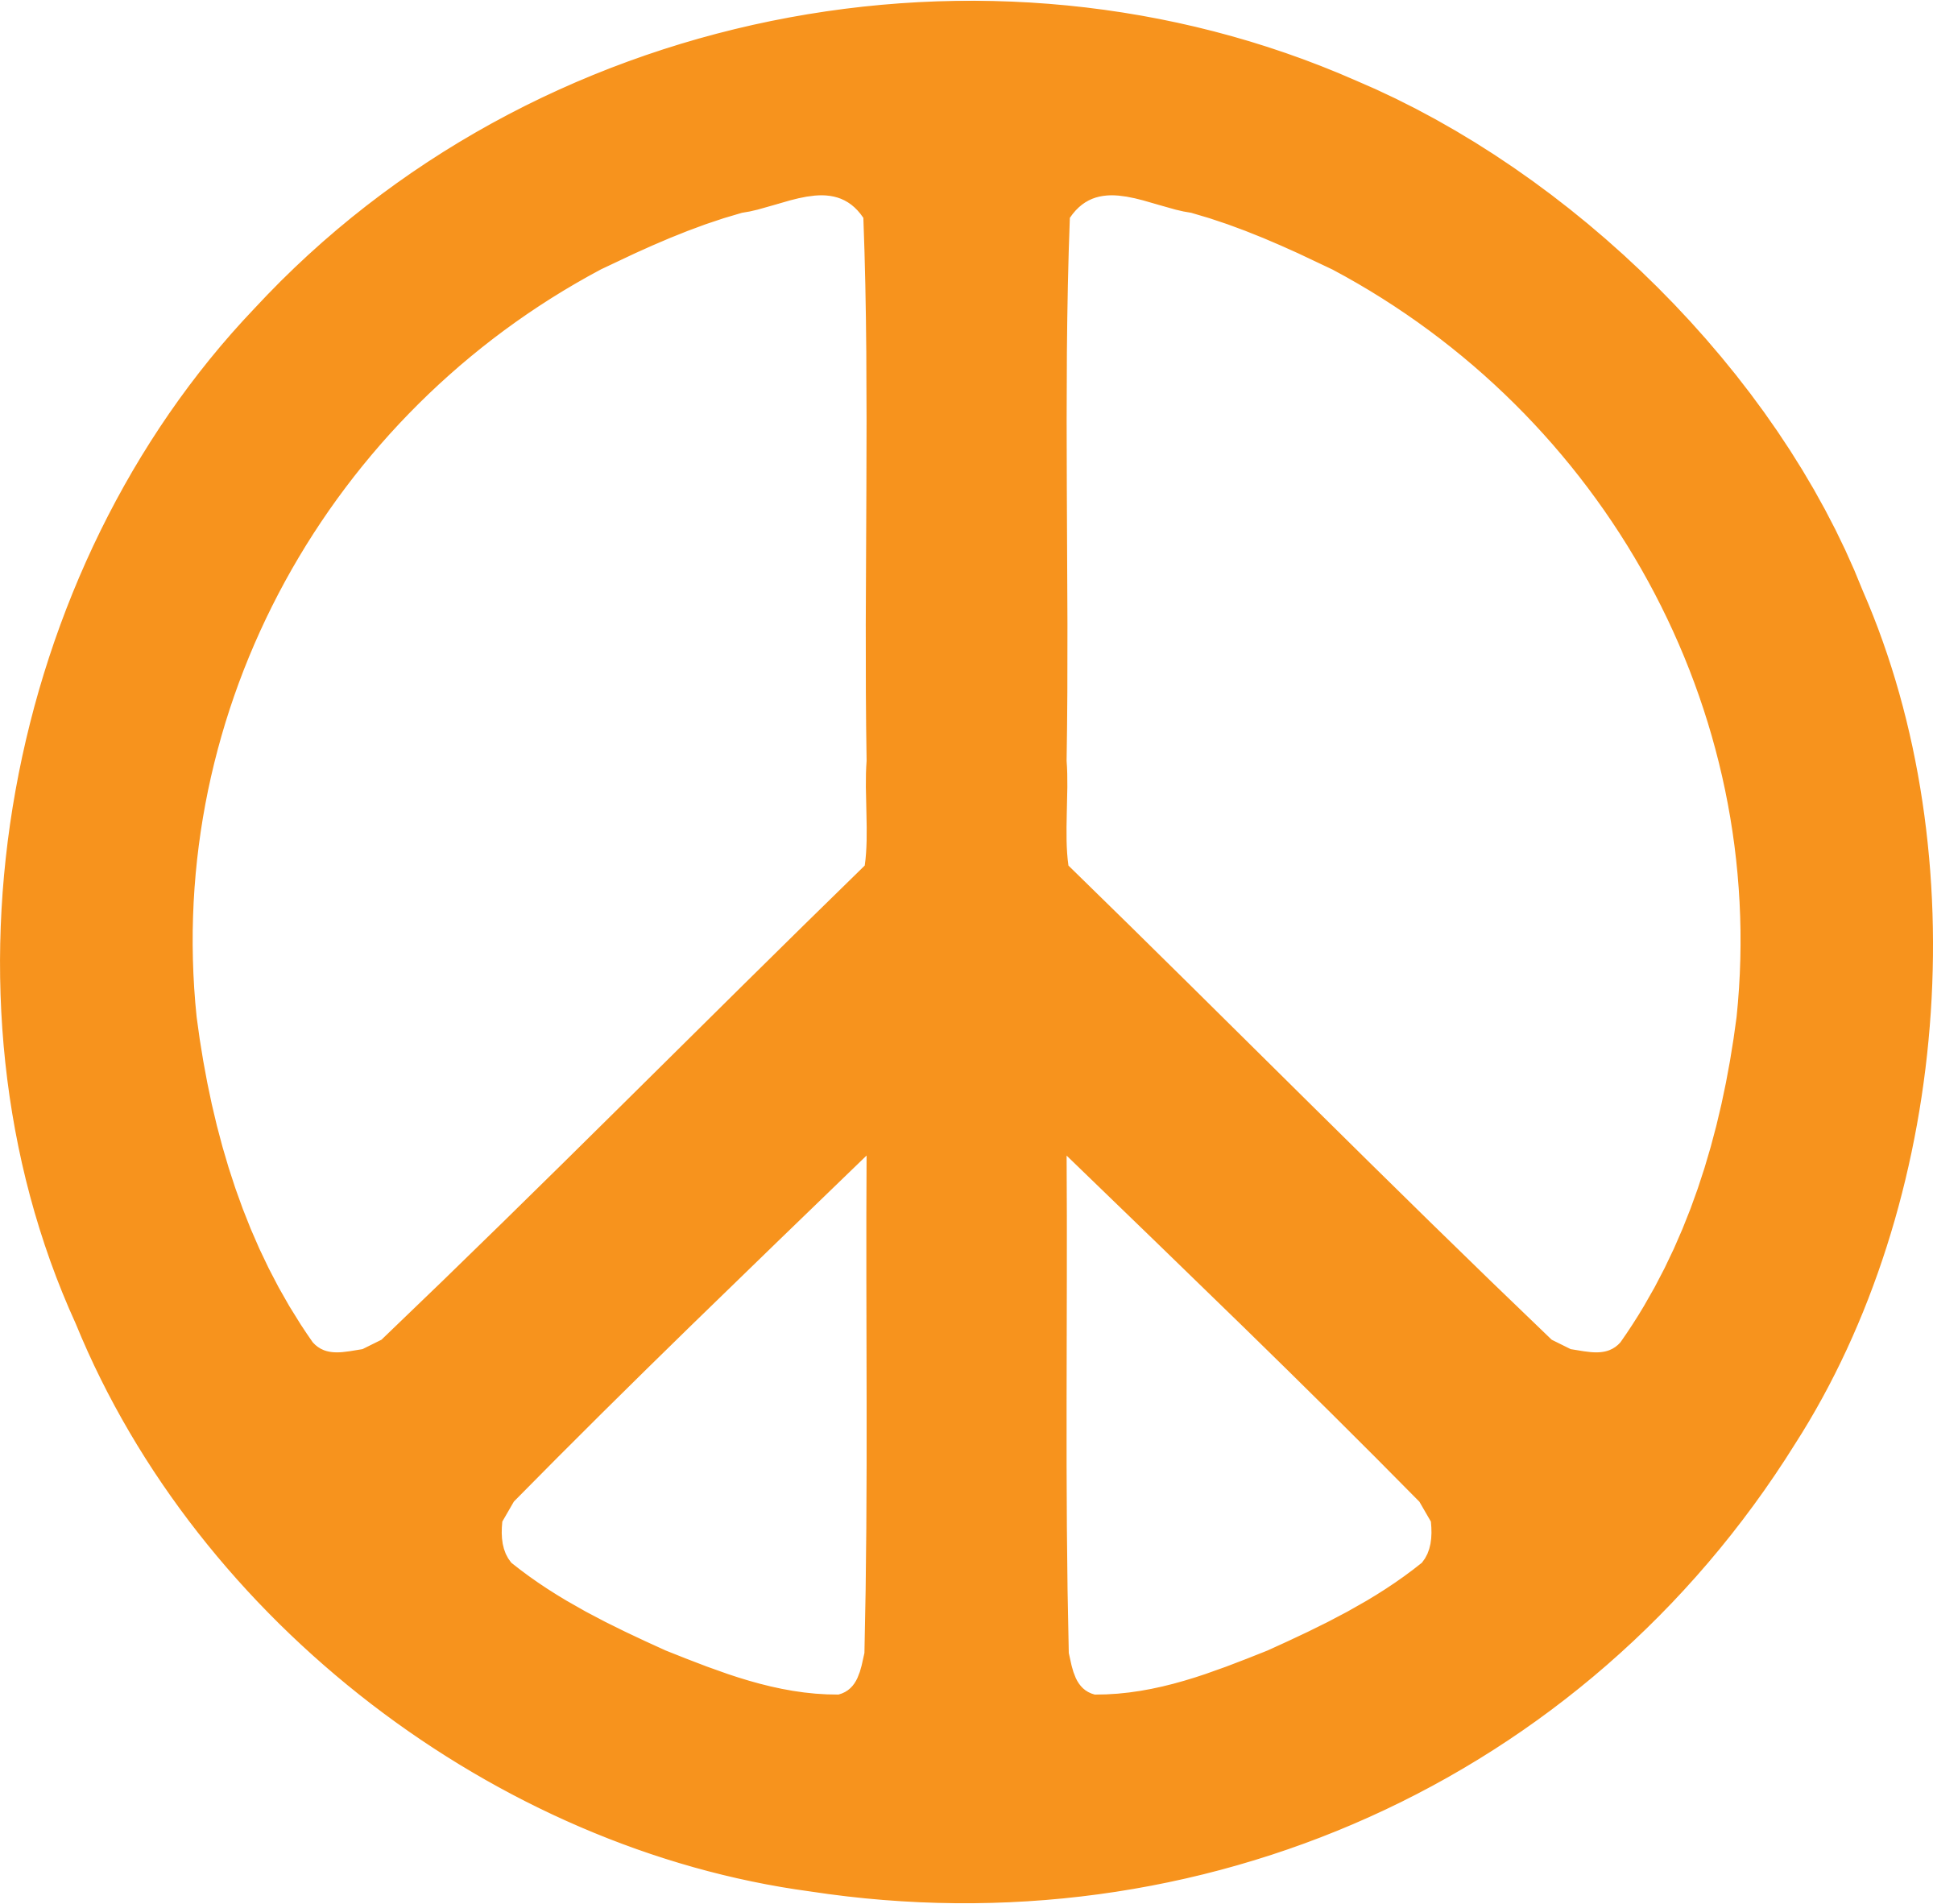 Yellow Peace Sign Logo - Peace Symbol PNG Transparent HD Image